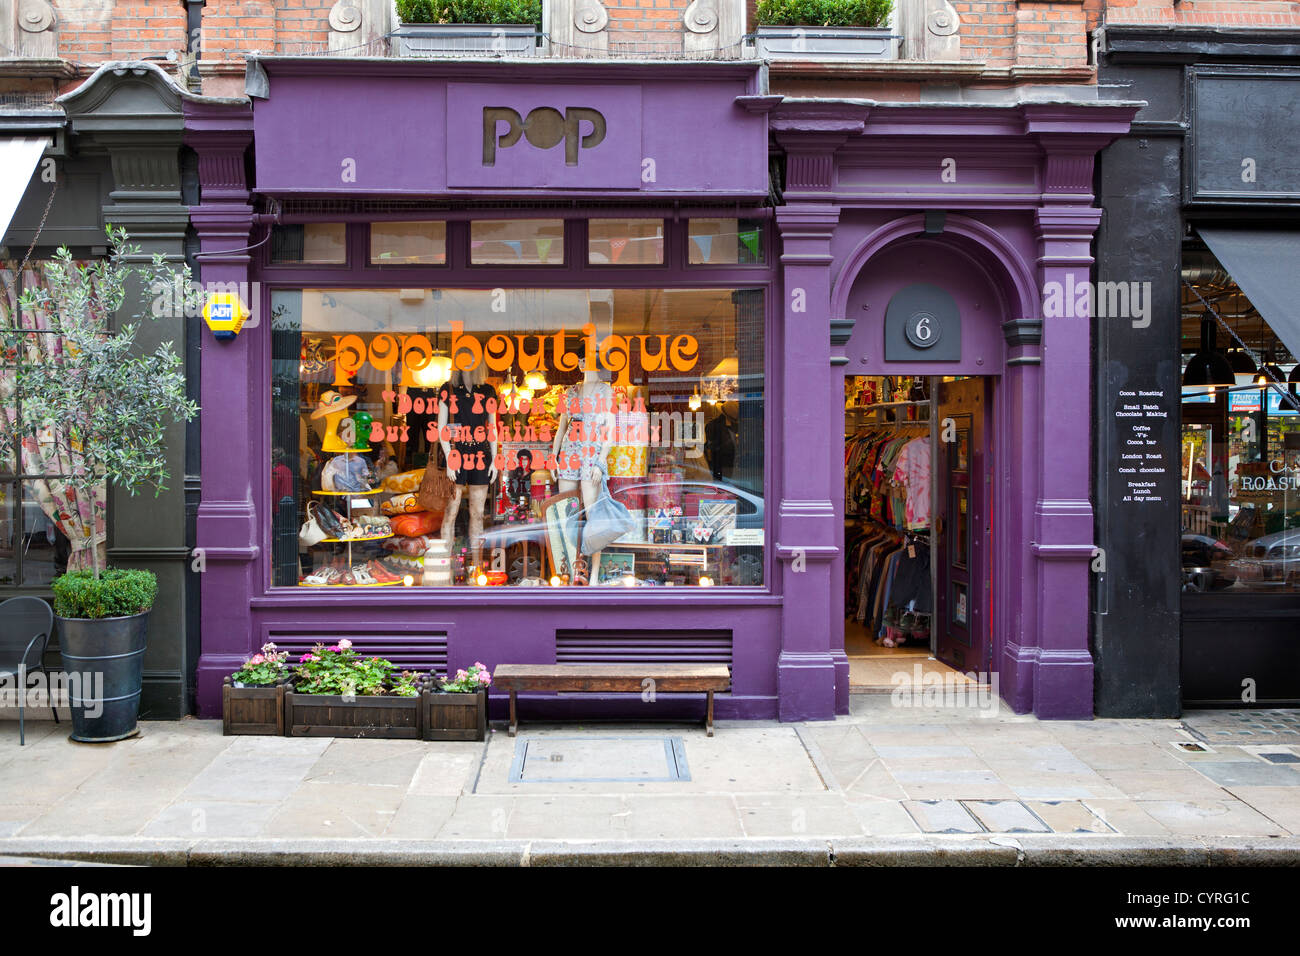 Pop boutique, Seven Dials, Covent Garden, London. Stock Photo